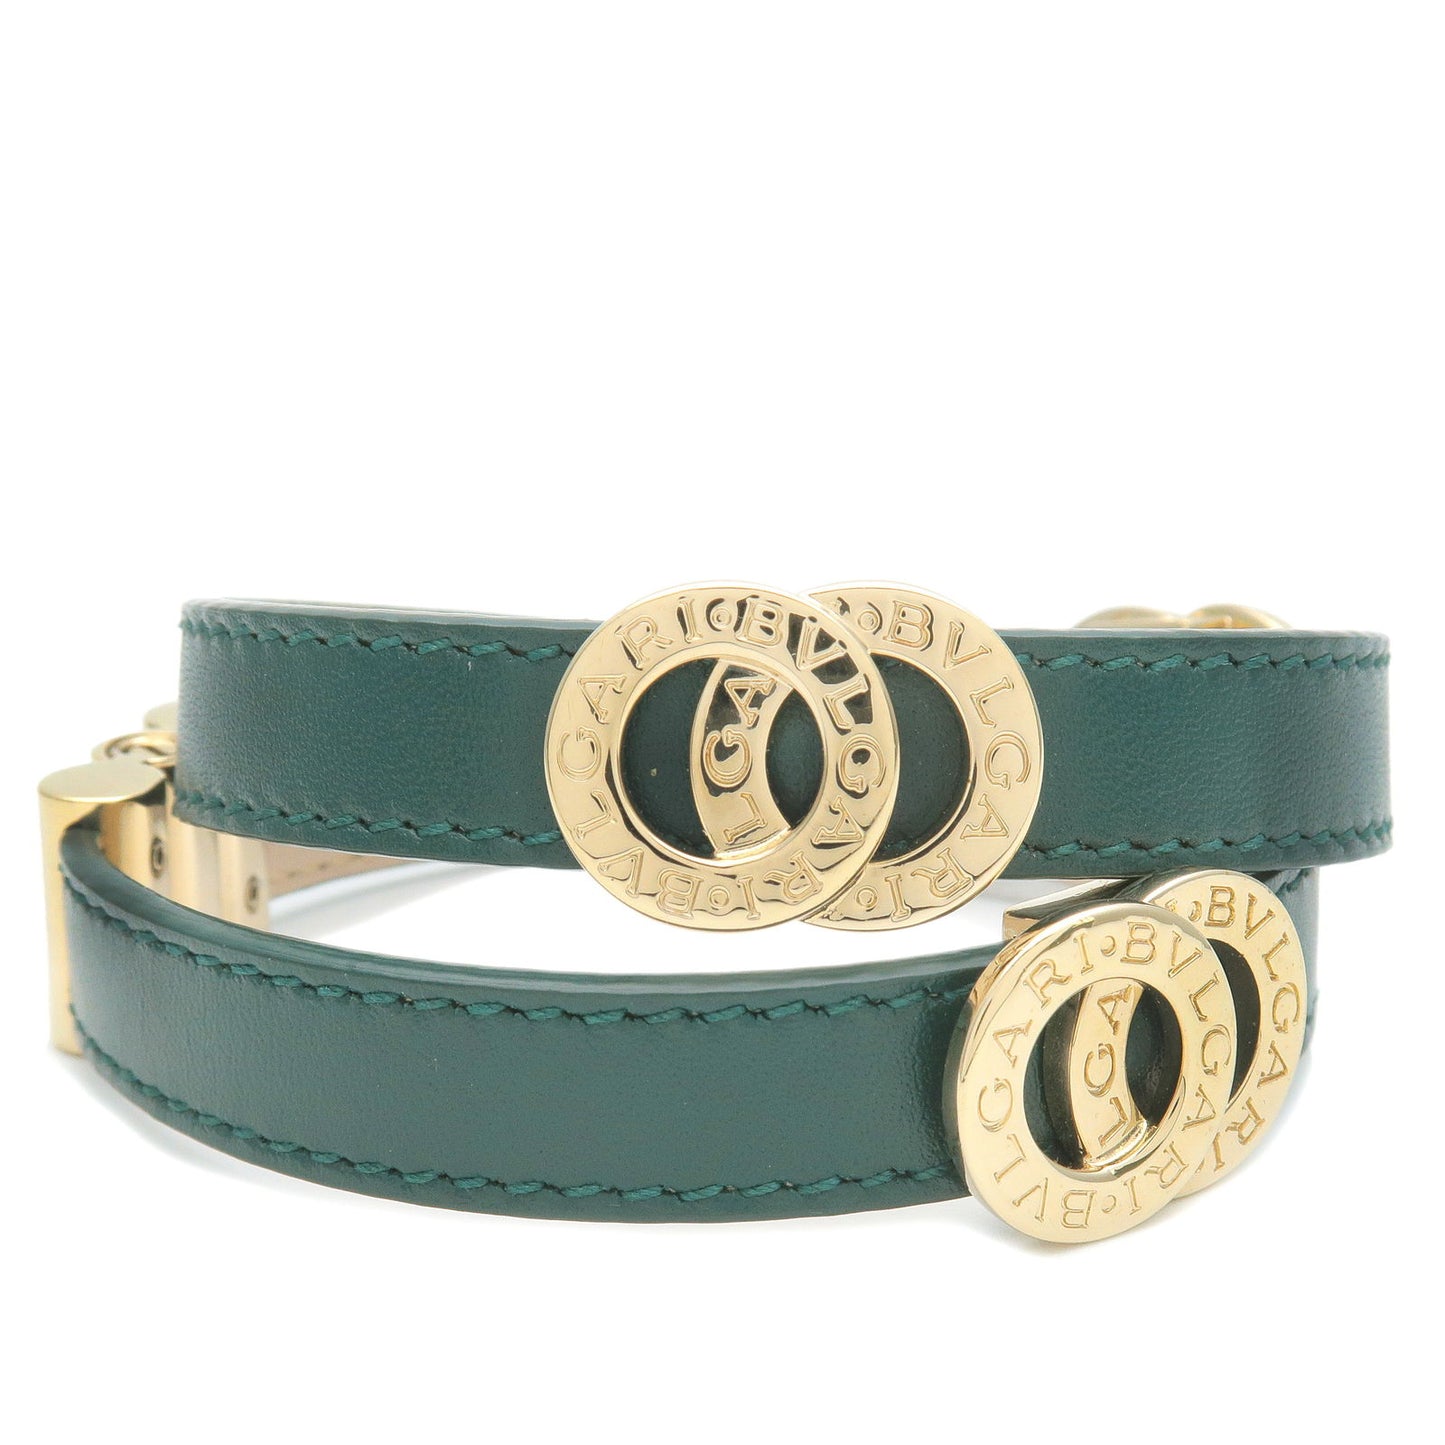 BVLGARI Bvlgari Bvlgari Leather Double Coiled Bracelet Green Gold